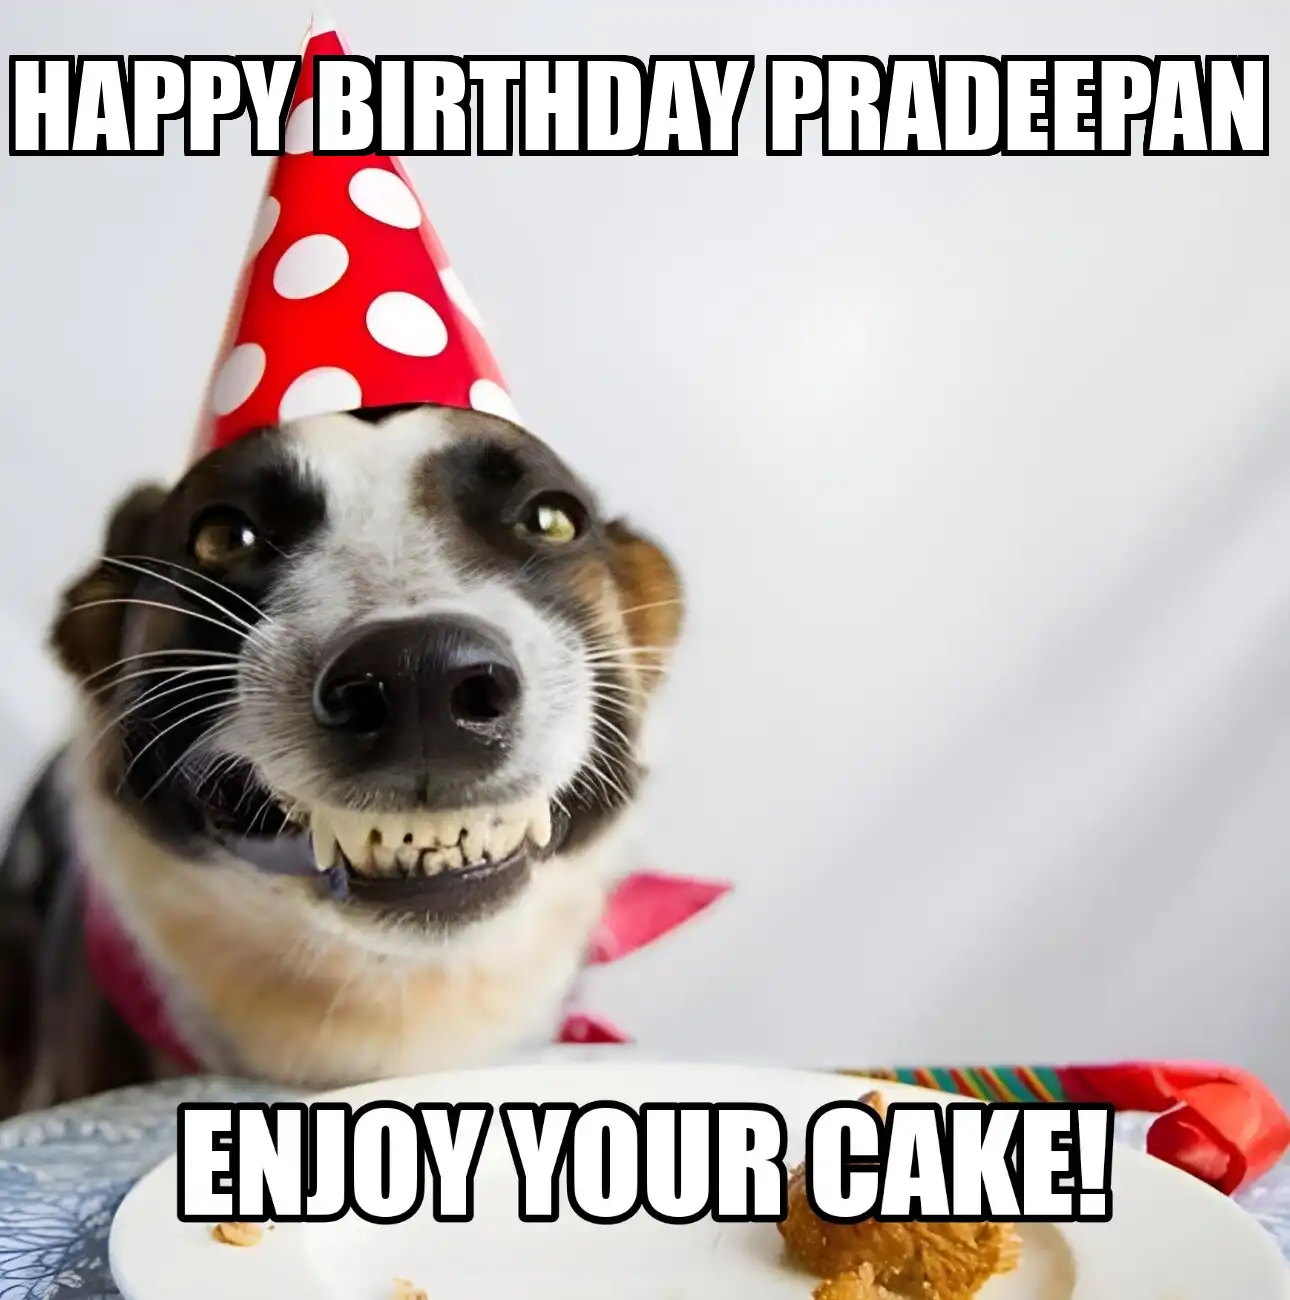 Happy Birthday Pradeepan Enjoy Your Cake Dog Meme